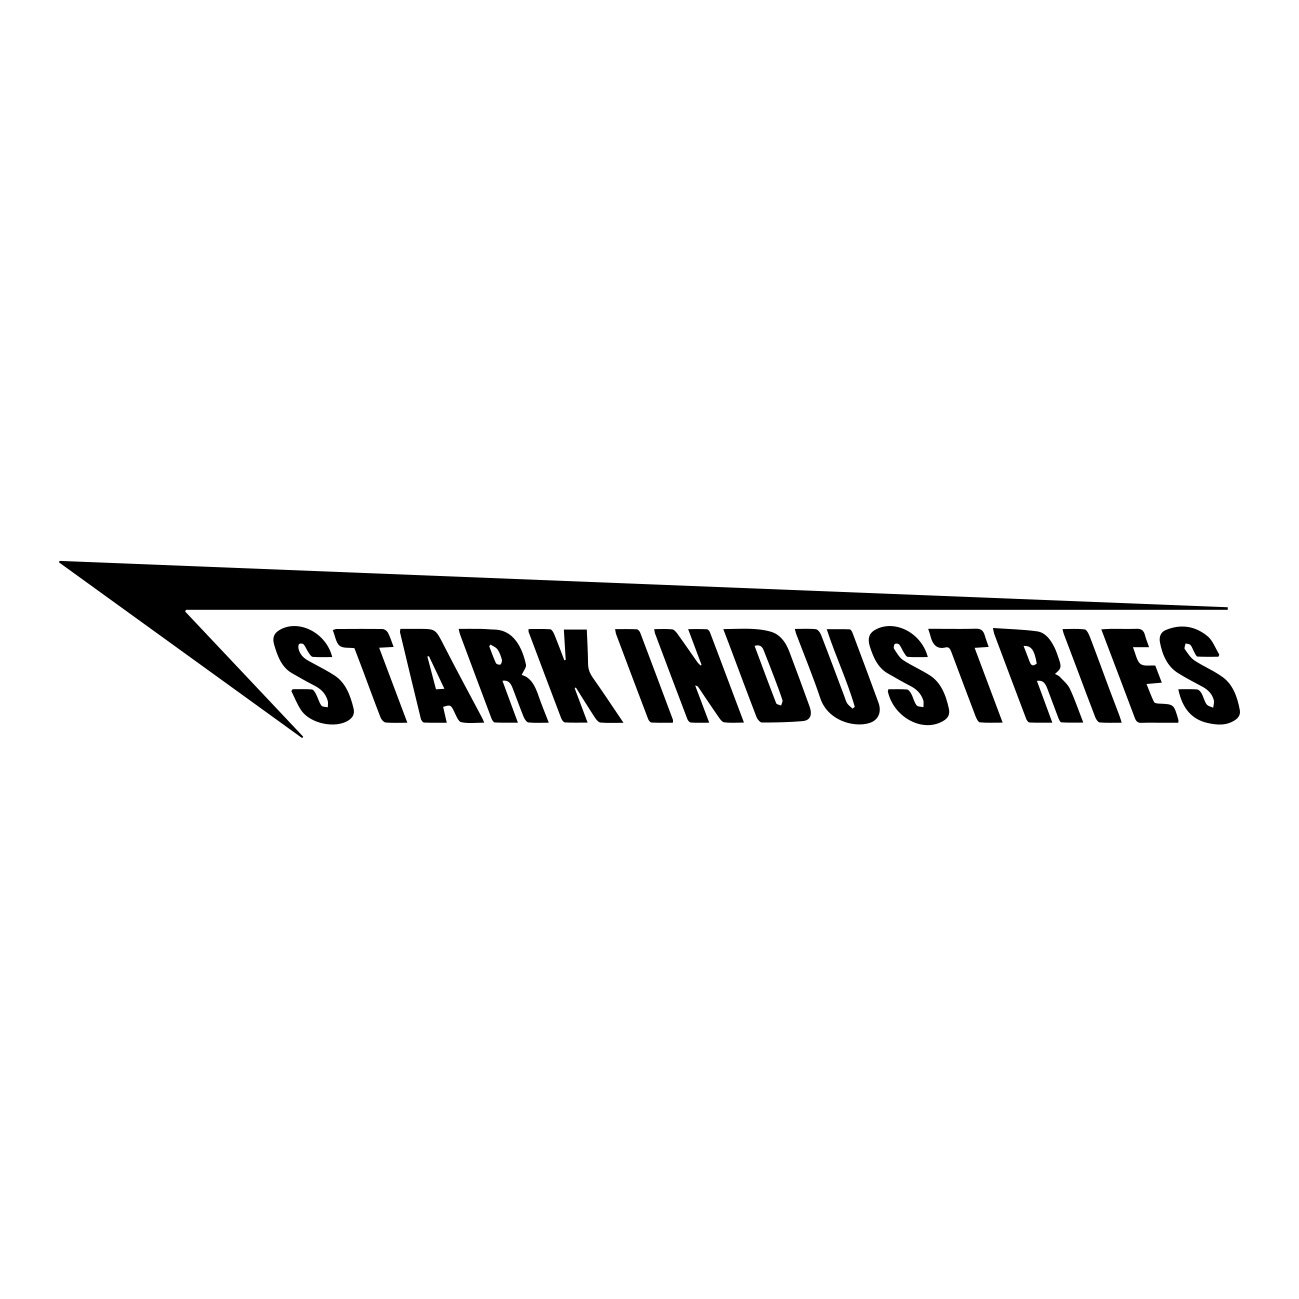 stark industries